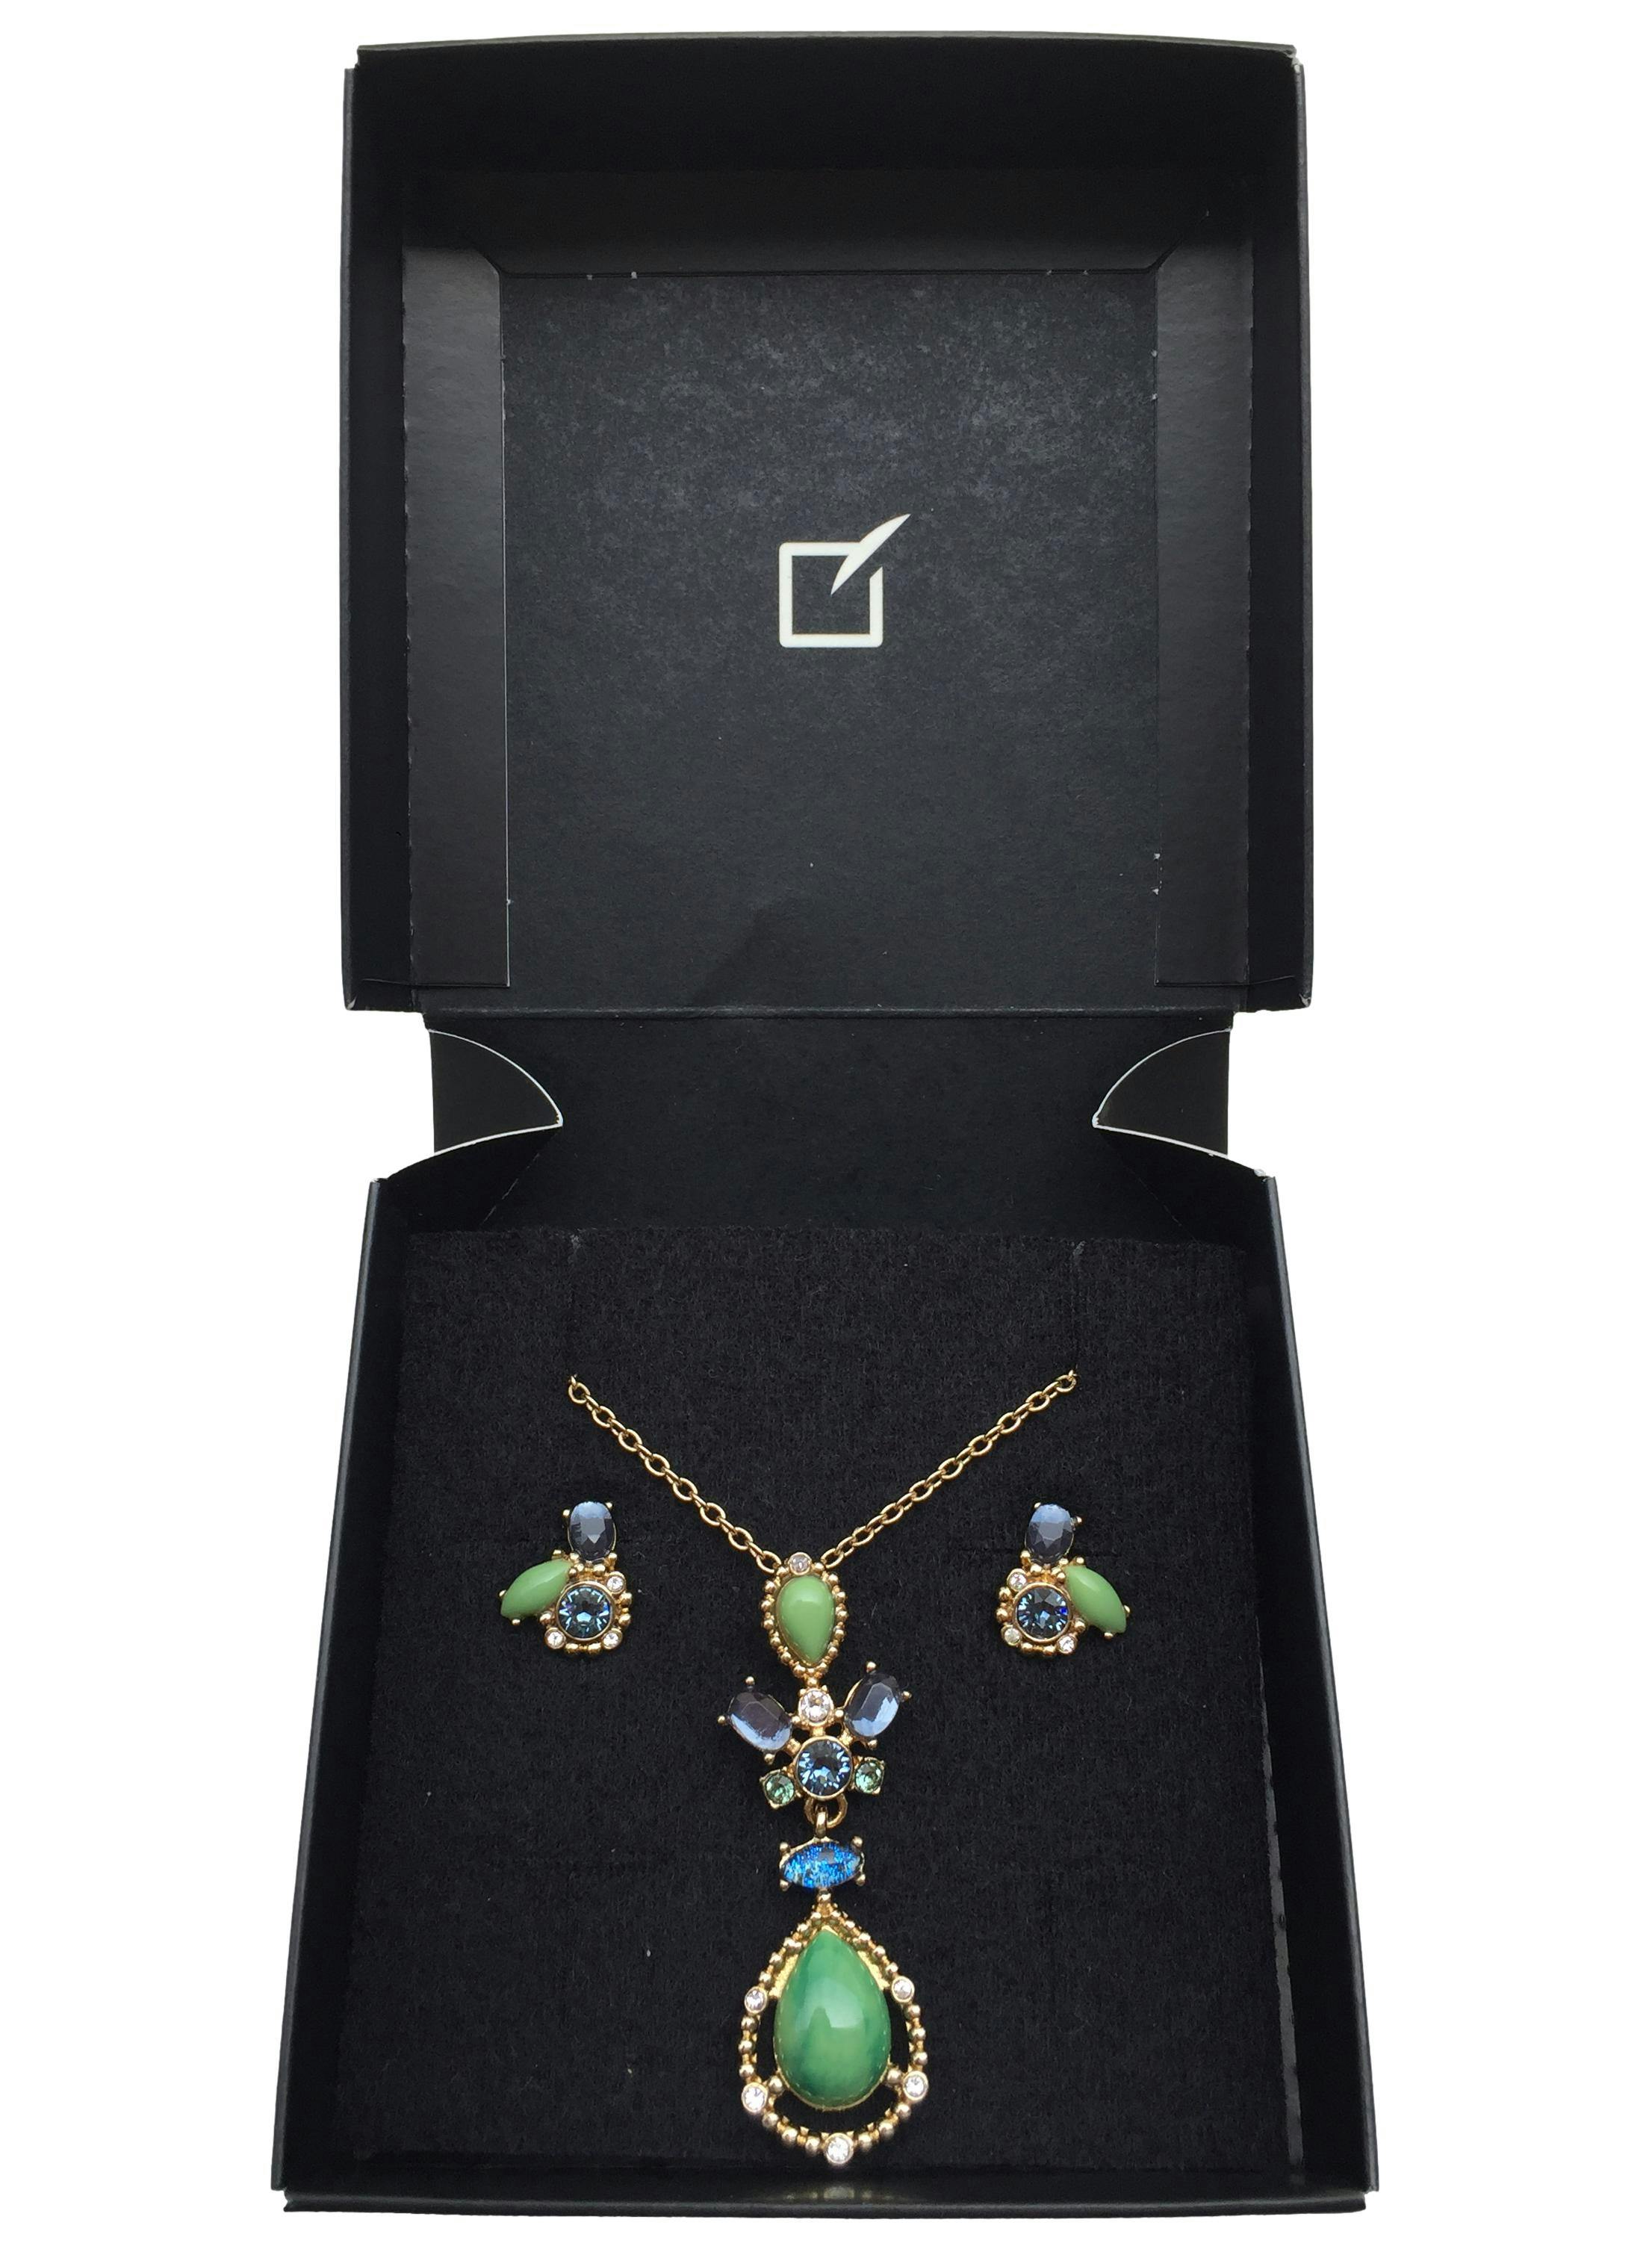 Set aretes y collar Unique dorado con aplicaciones verdes azules. Largo collar 40cm + 8cm